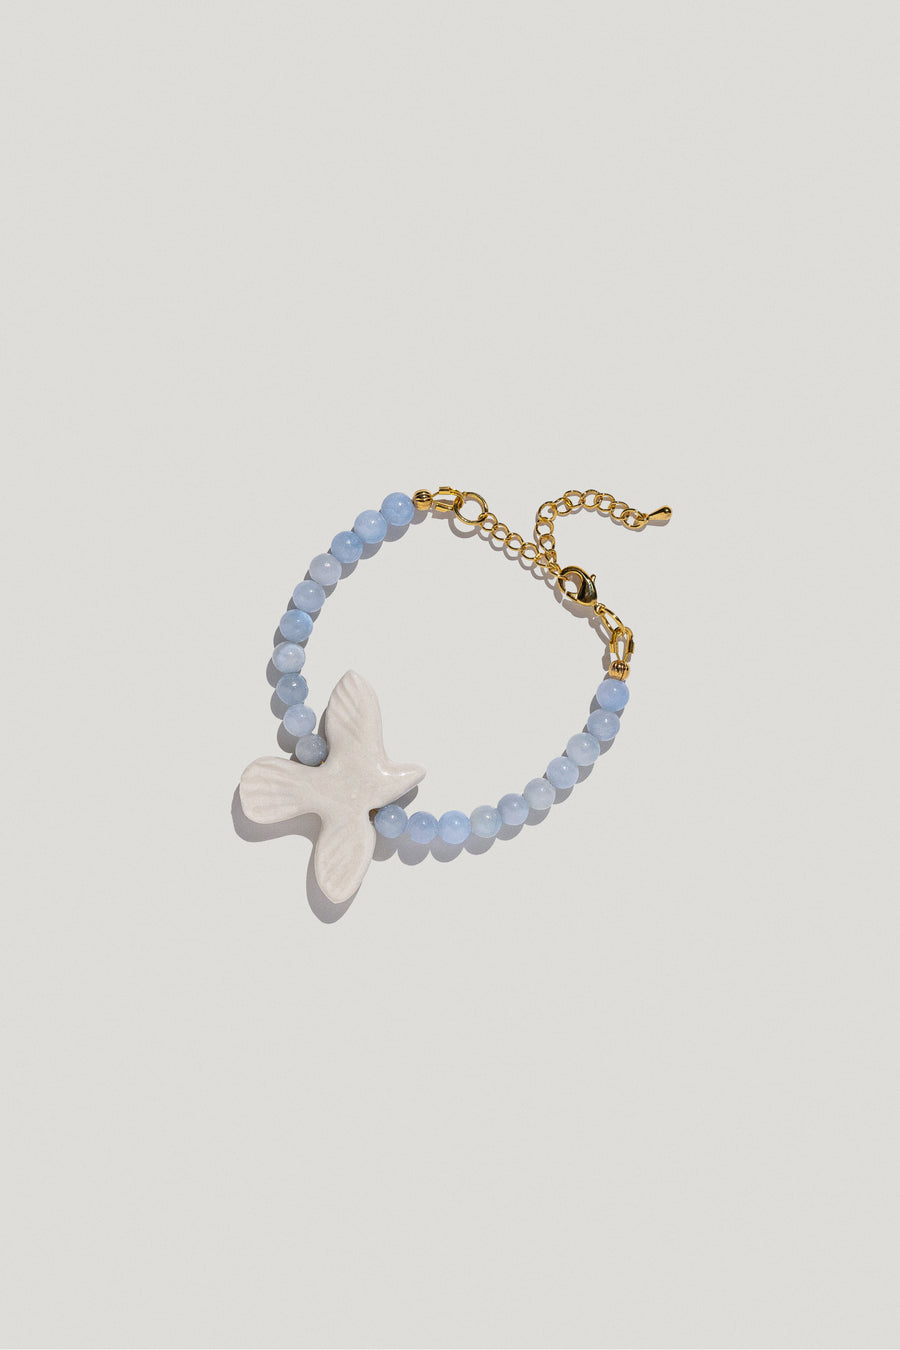 Myrni bracelet with blue quartz and a porcelain bird